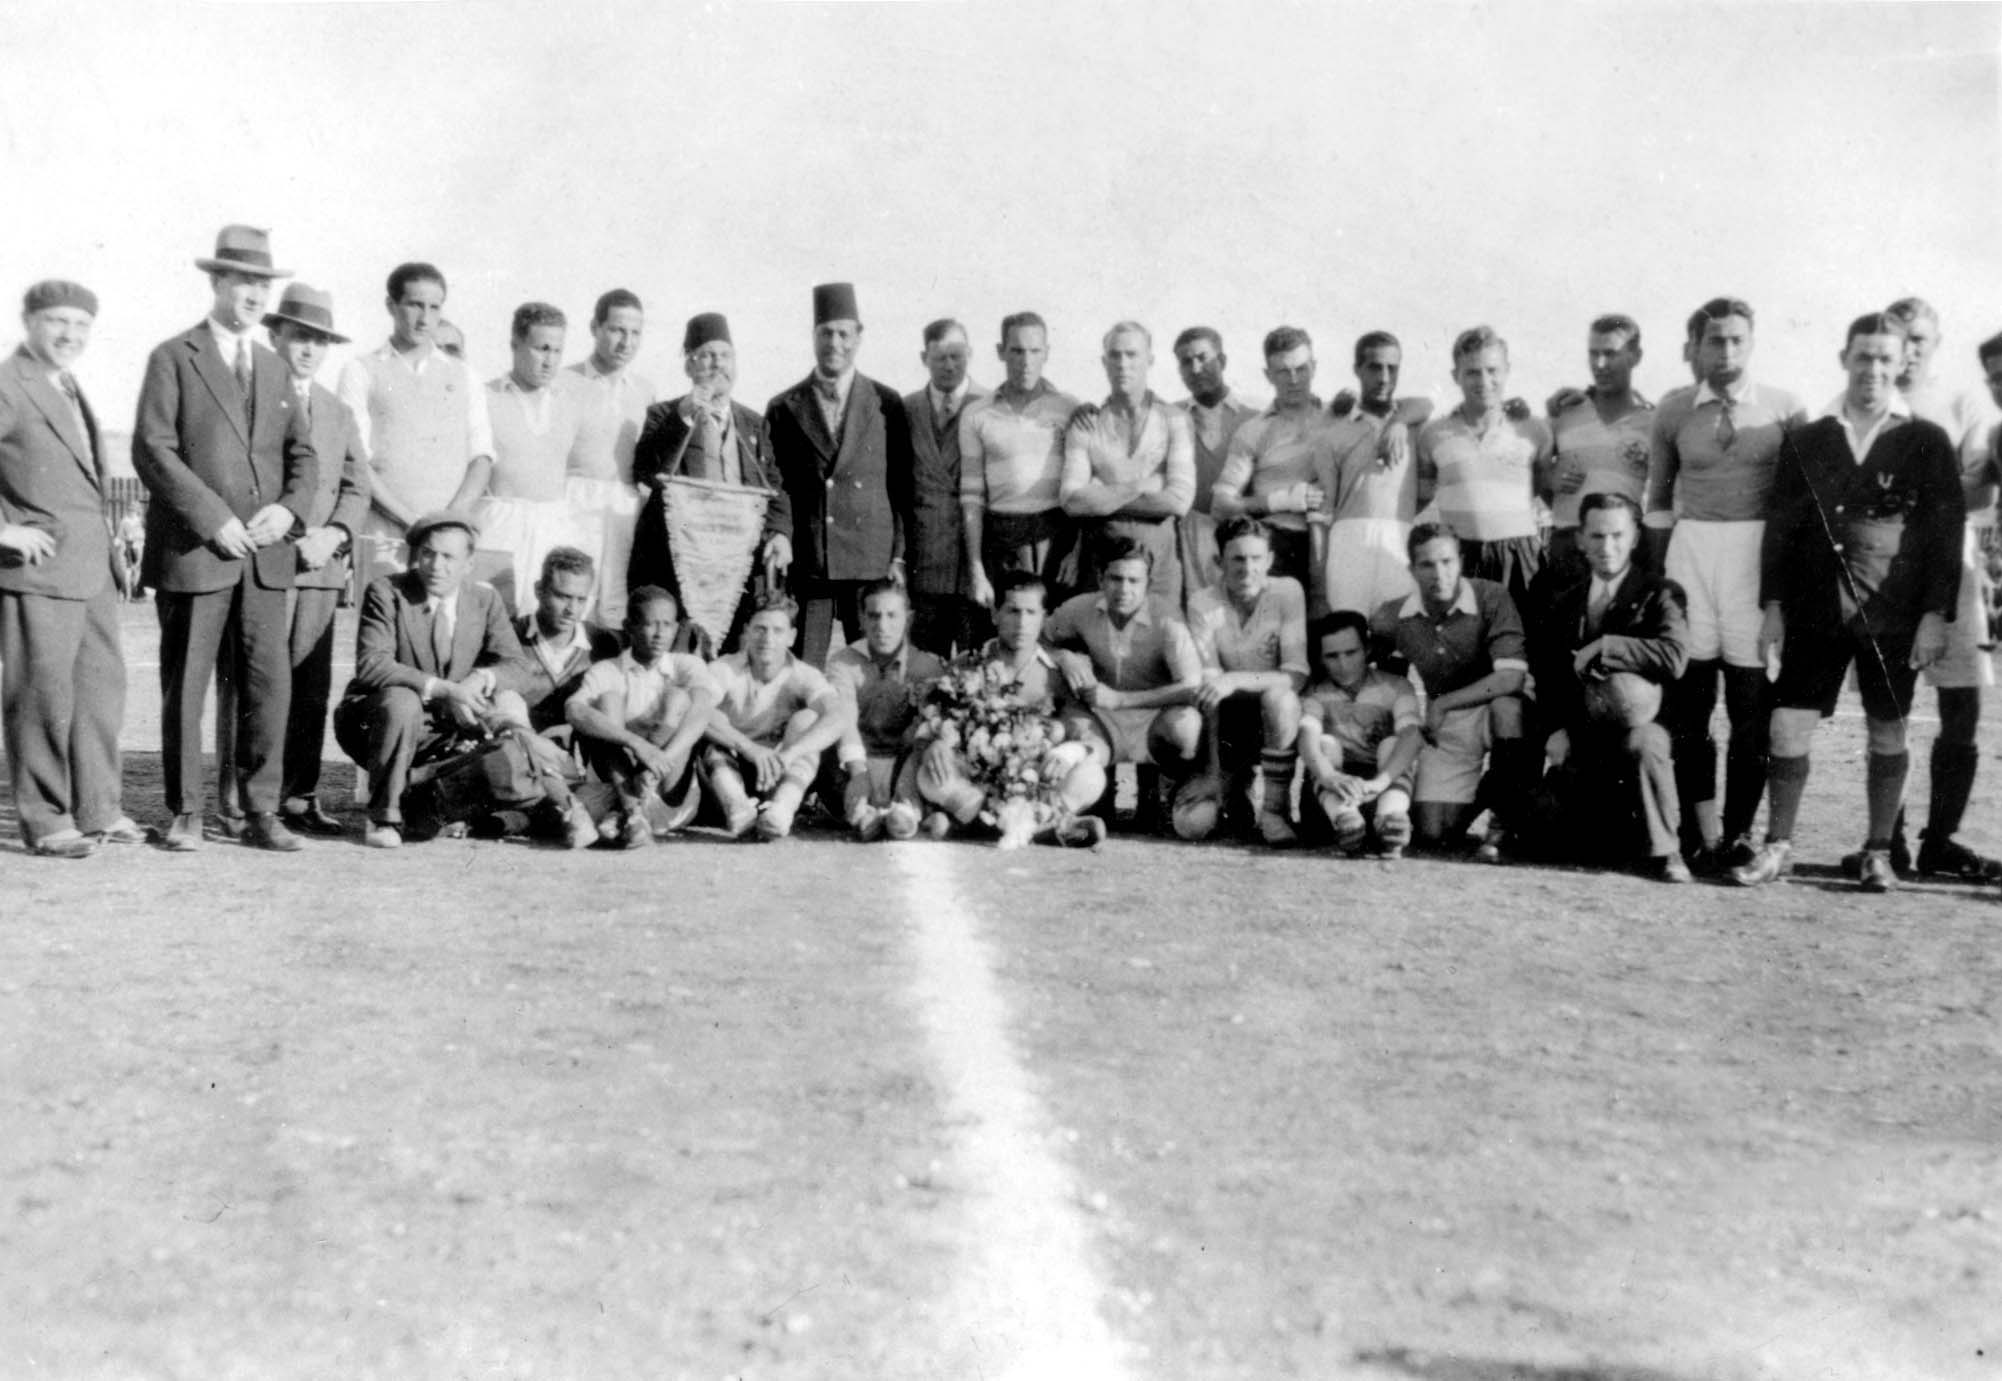 Monastir, Macedonia, Yugoslavia, Prewar, a football team in the city